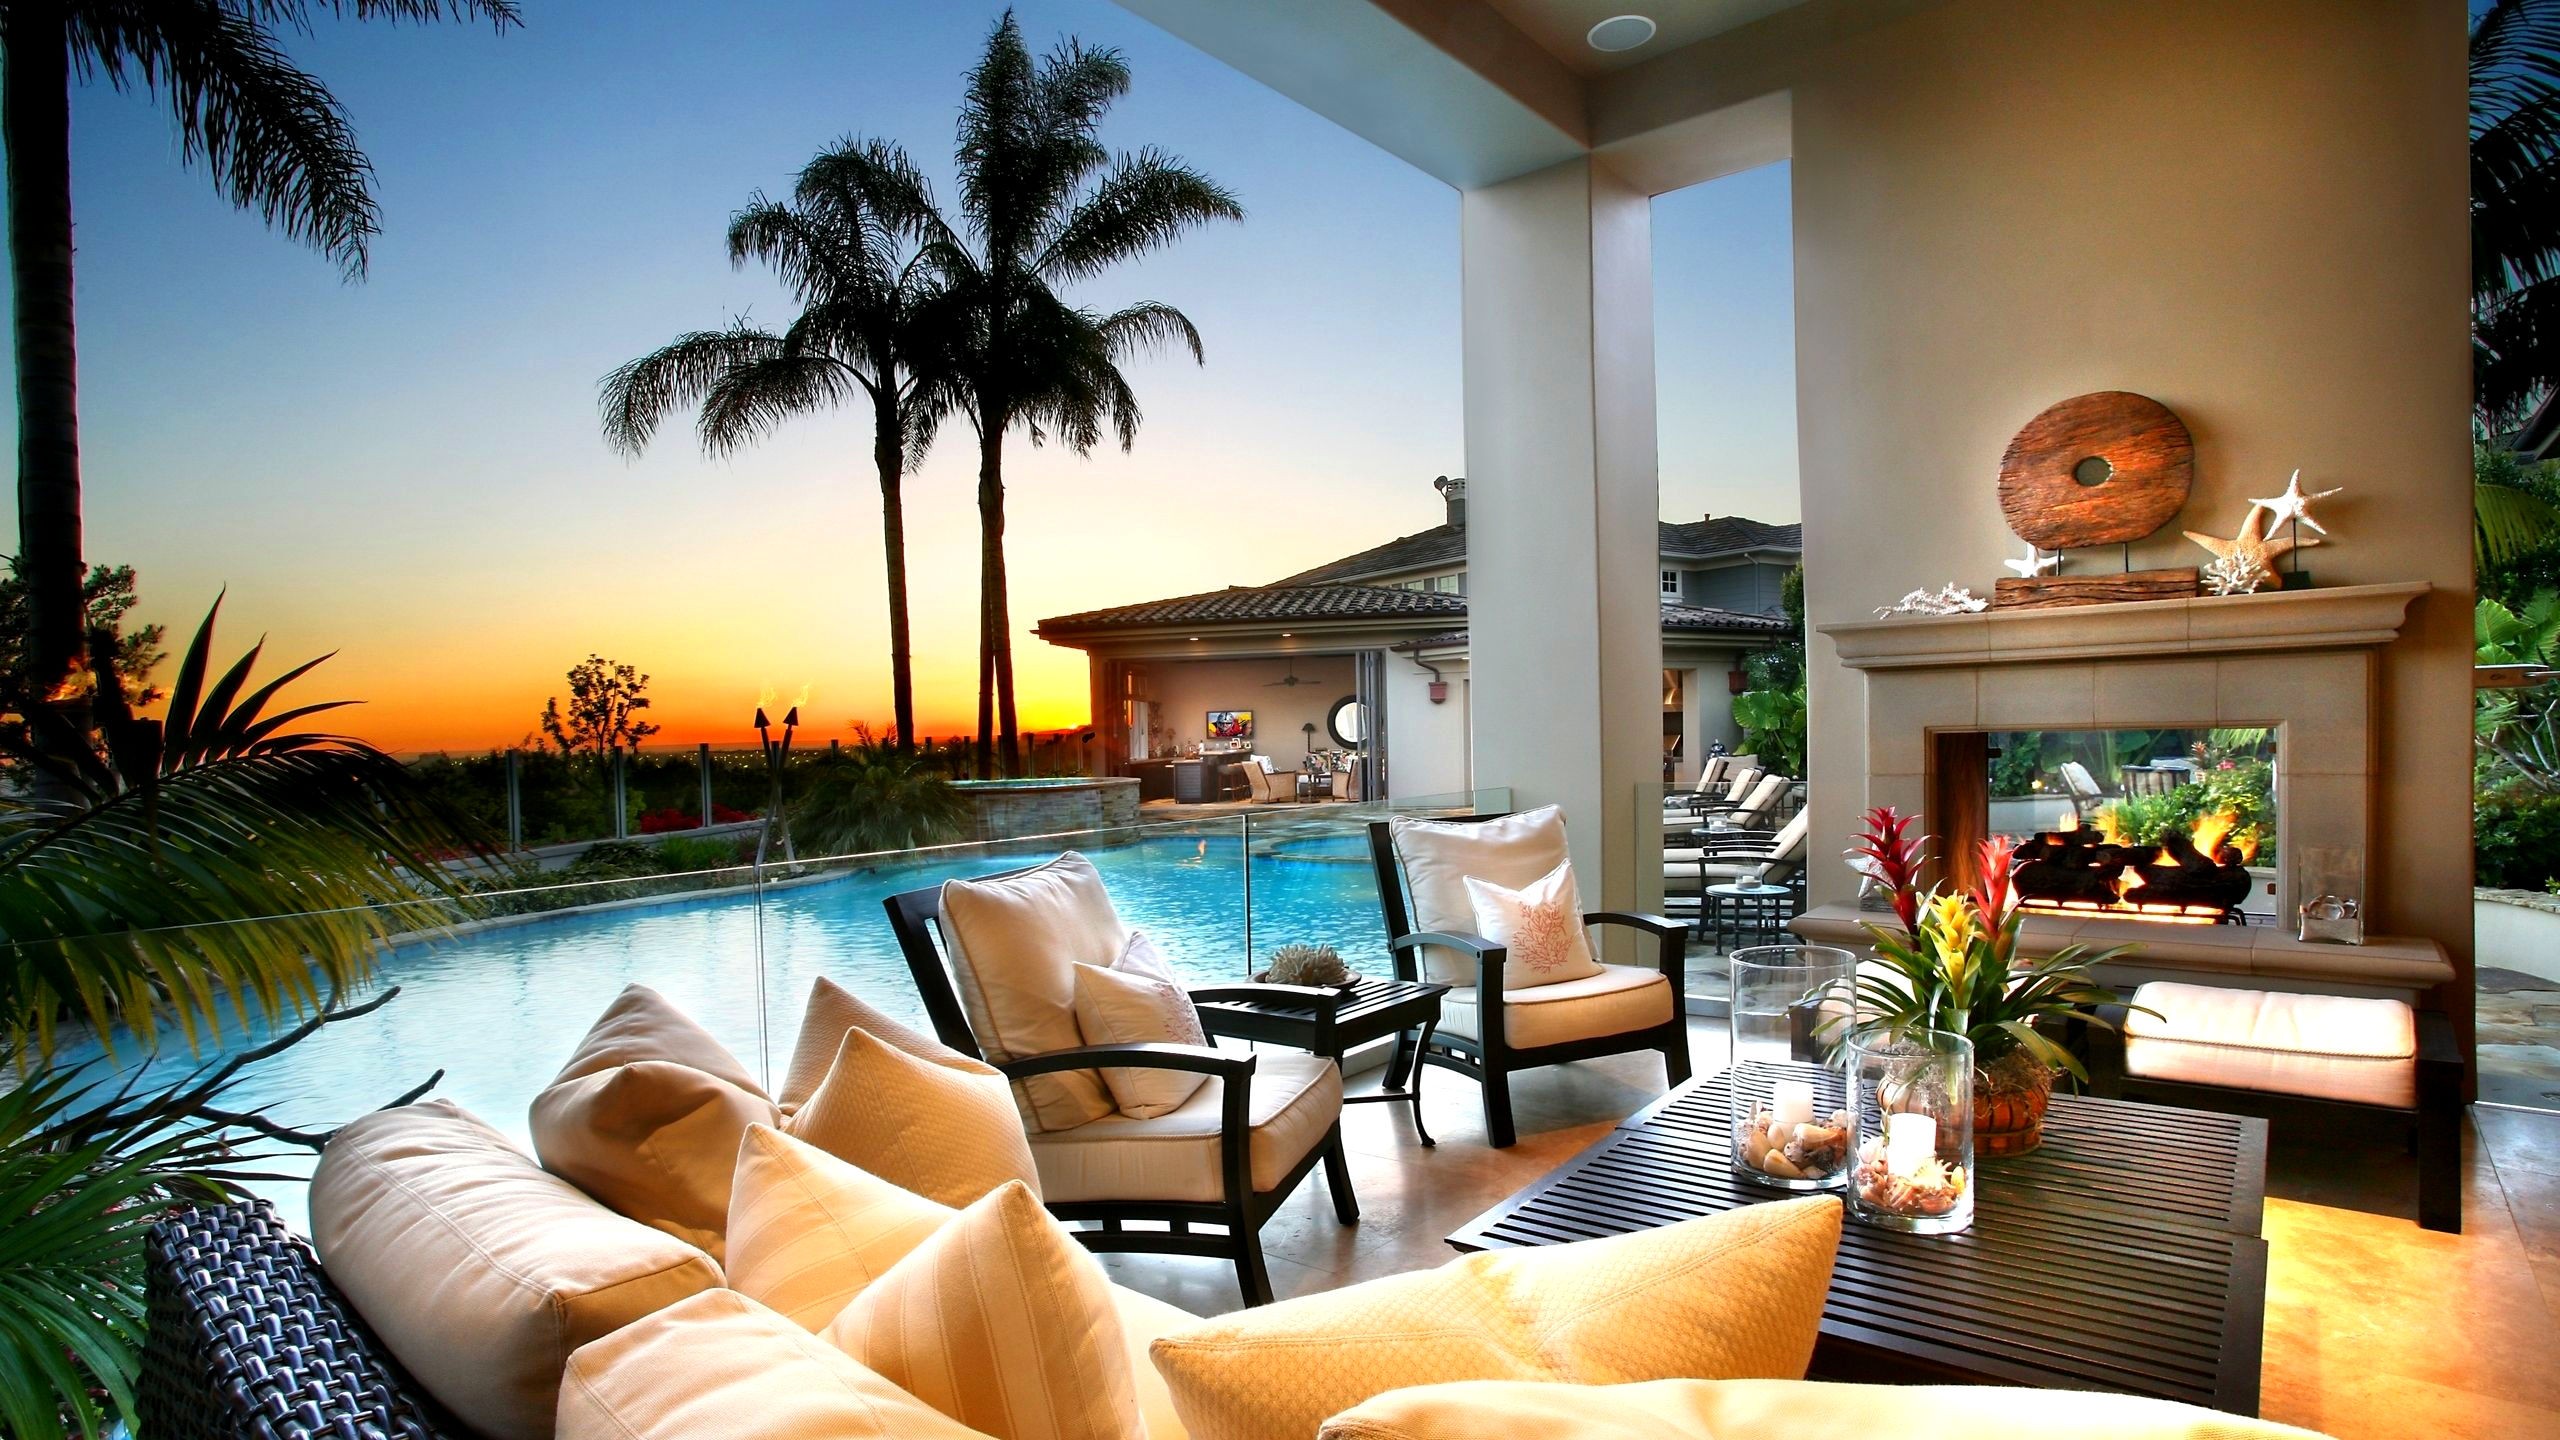 General 2560x1440 hotel swimming pool luxury sunset